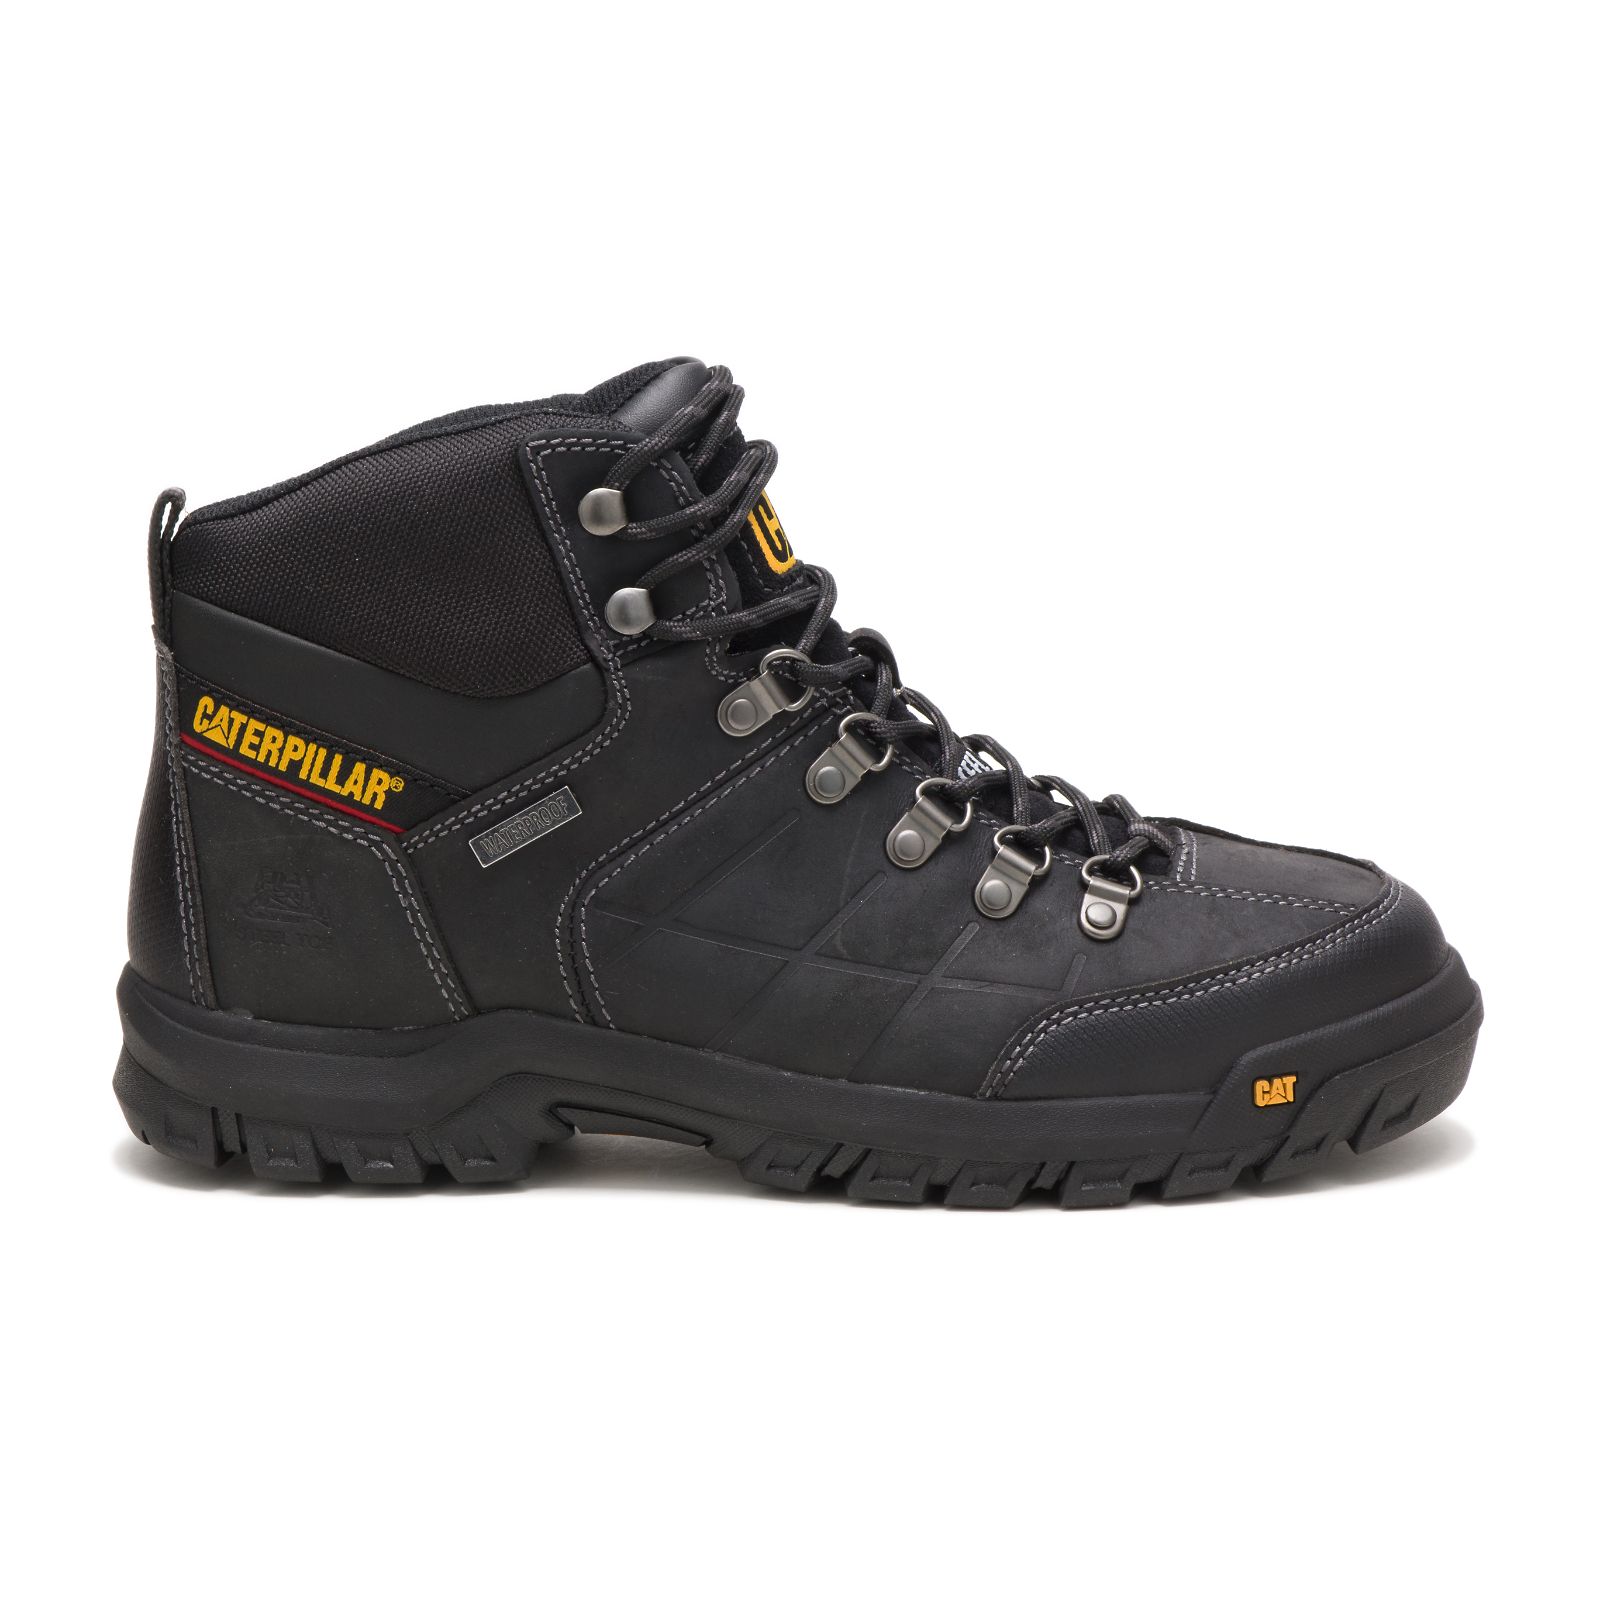 Caterpillar Work Boots Dubai - Caterpillar Threshold Waterproof Steel Toe Mens - Black LPFZYD301